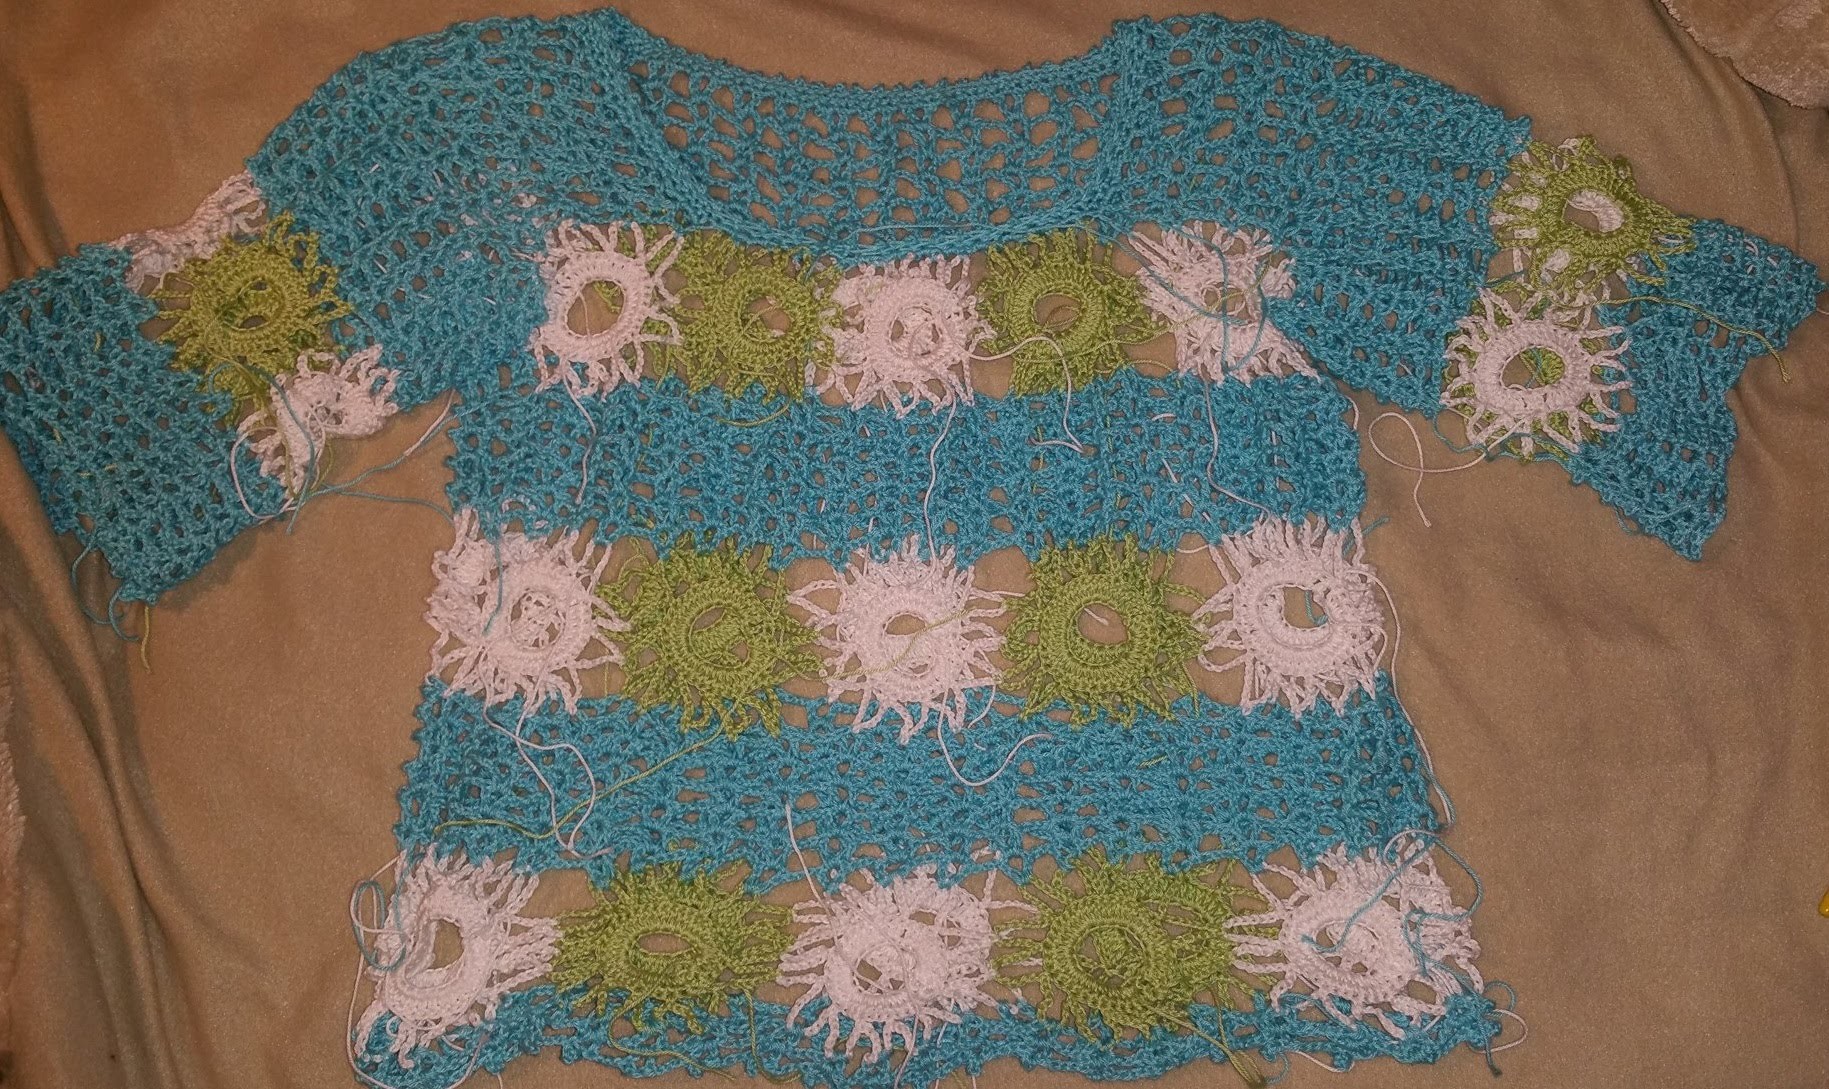 Sommershirt Claudia Filli Crochet Granny # Häkeln mit Yve